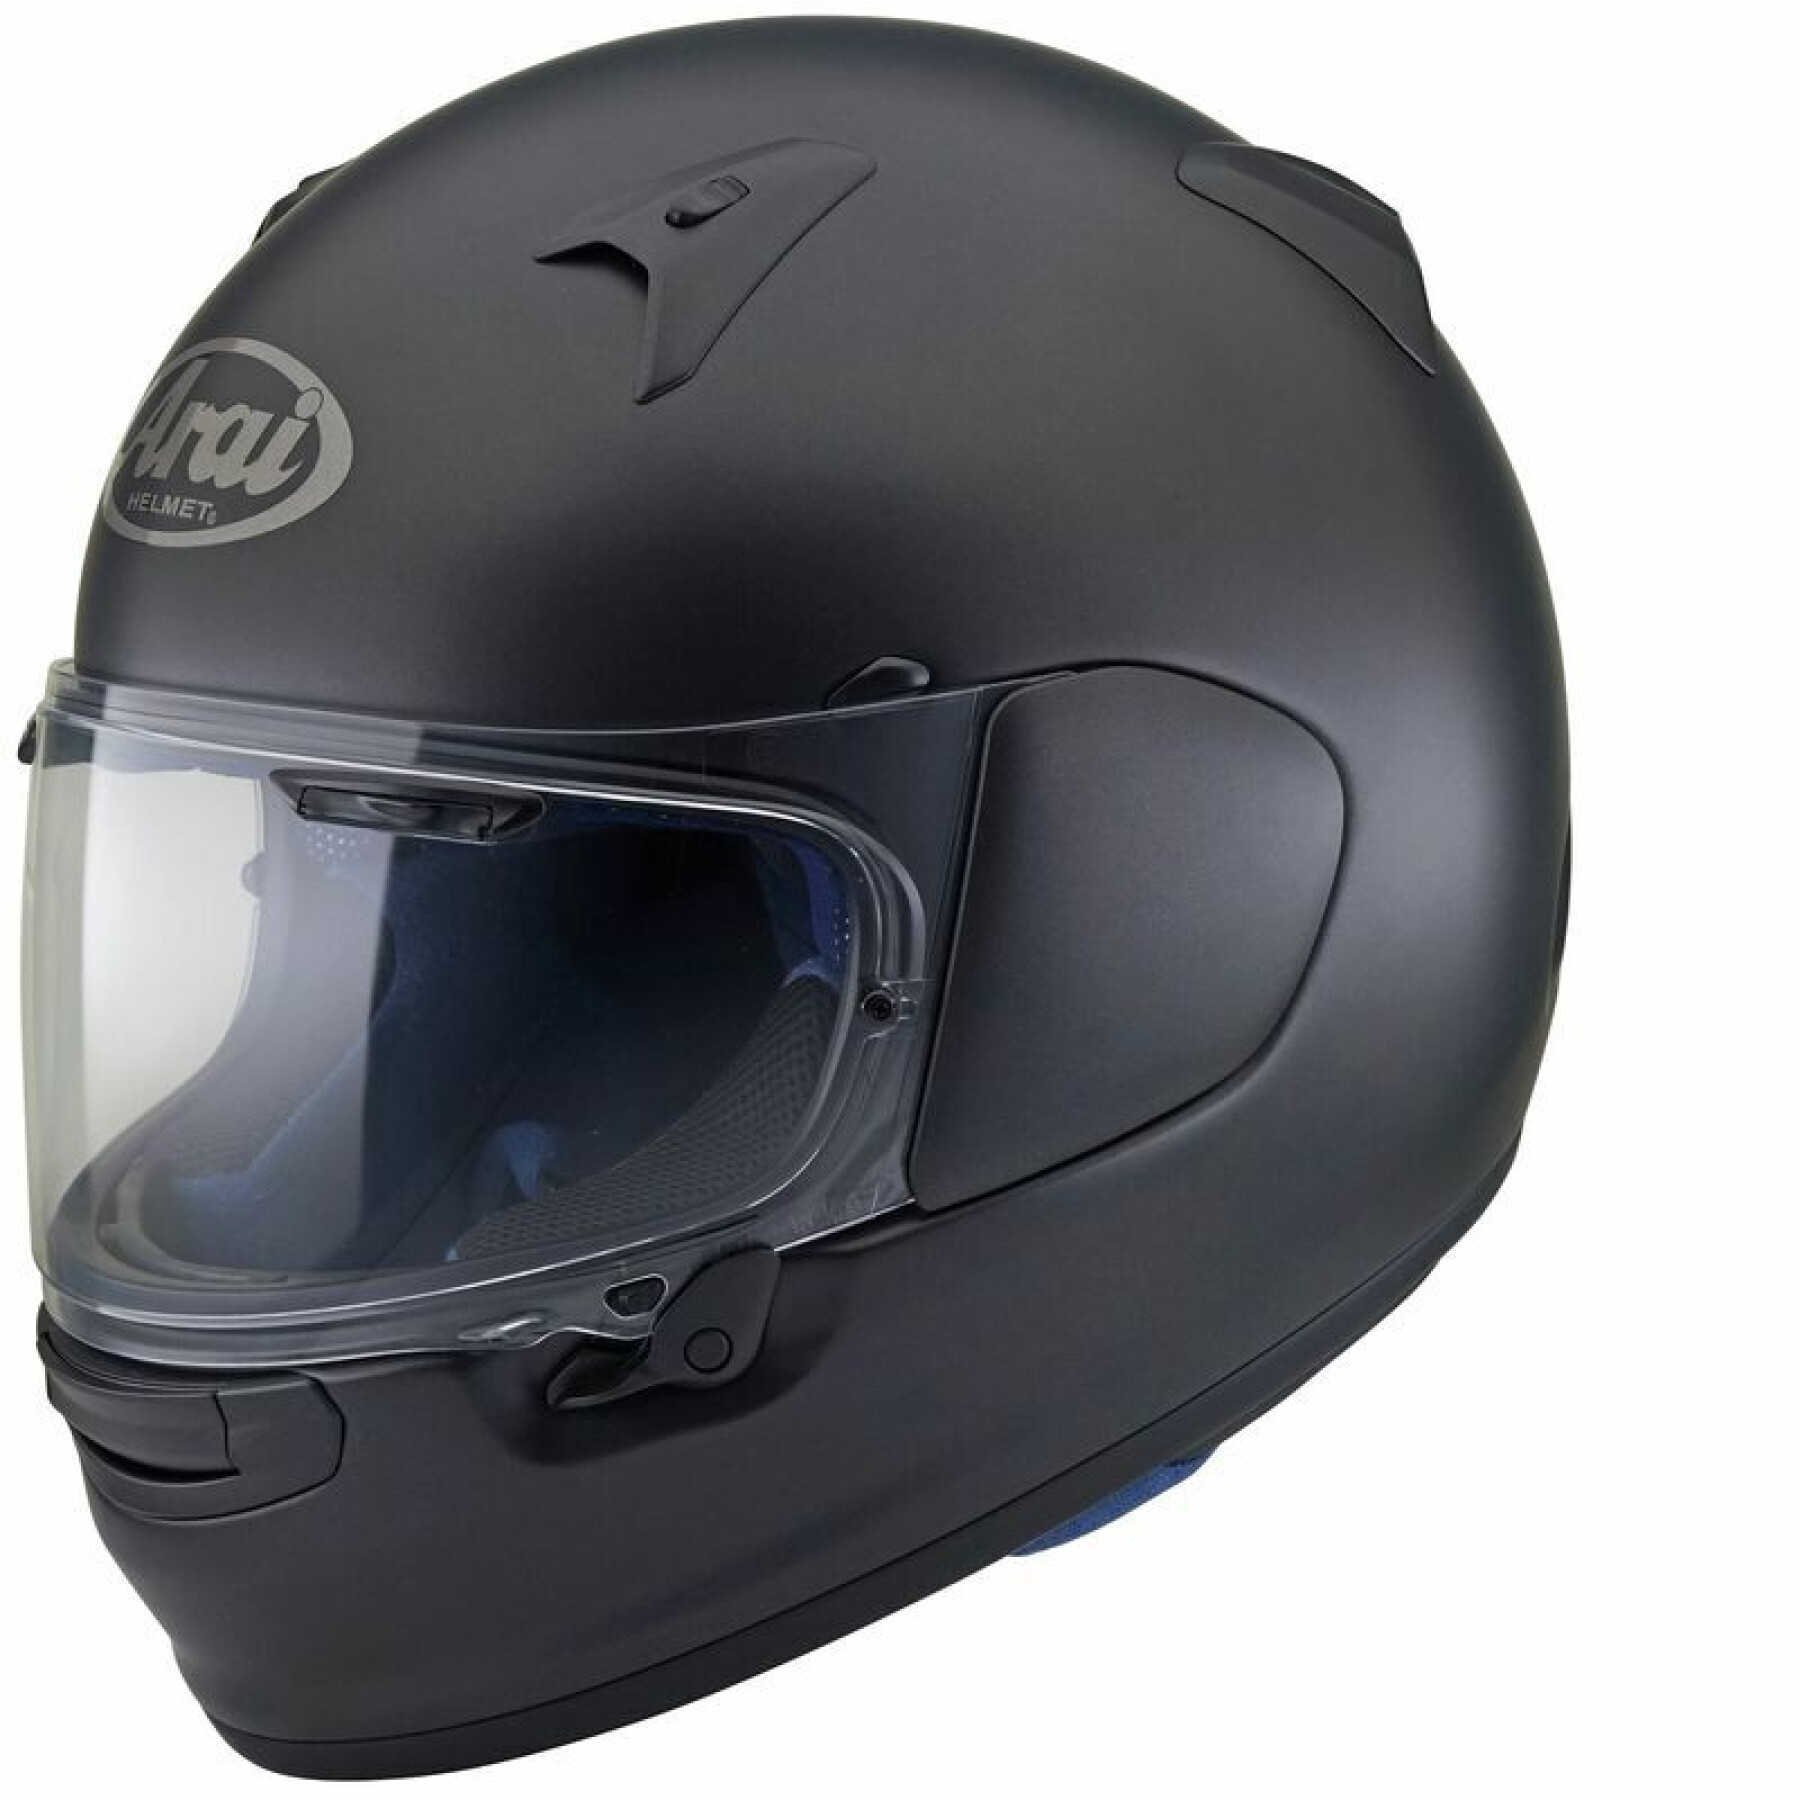 Full face motorcycle helmet Arai Profile-V